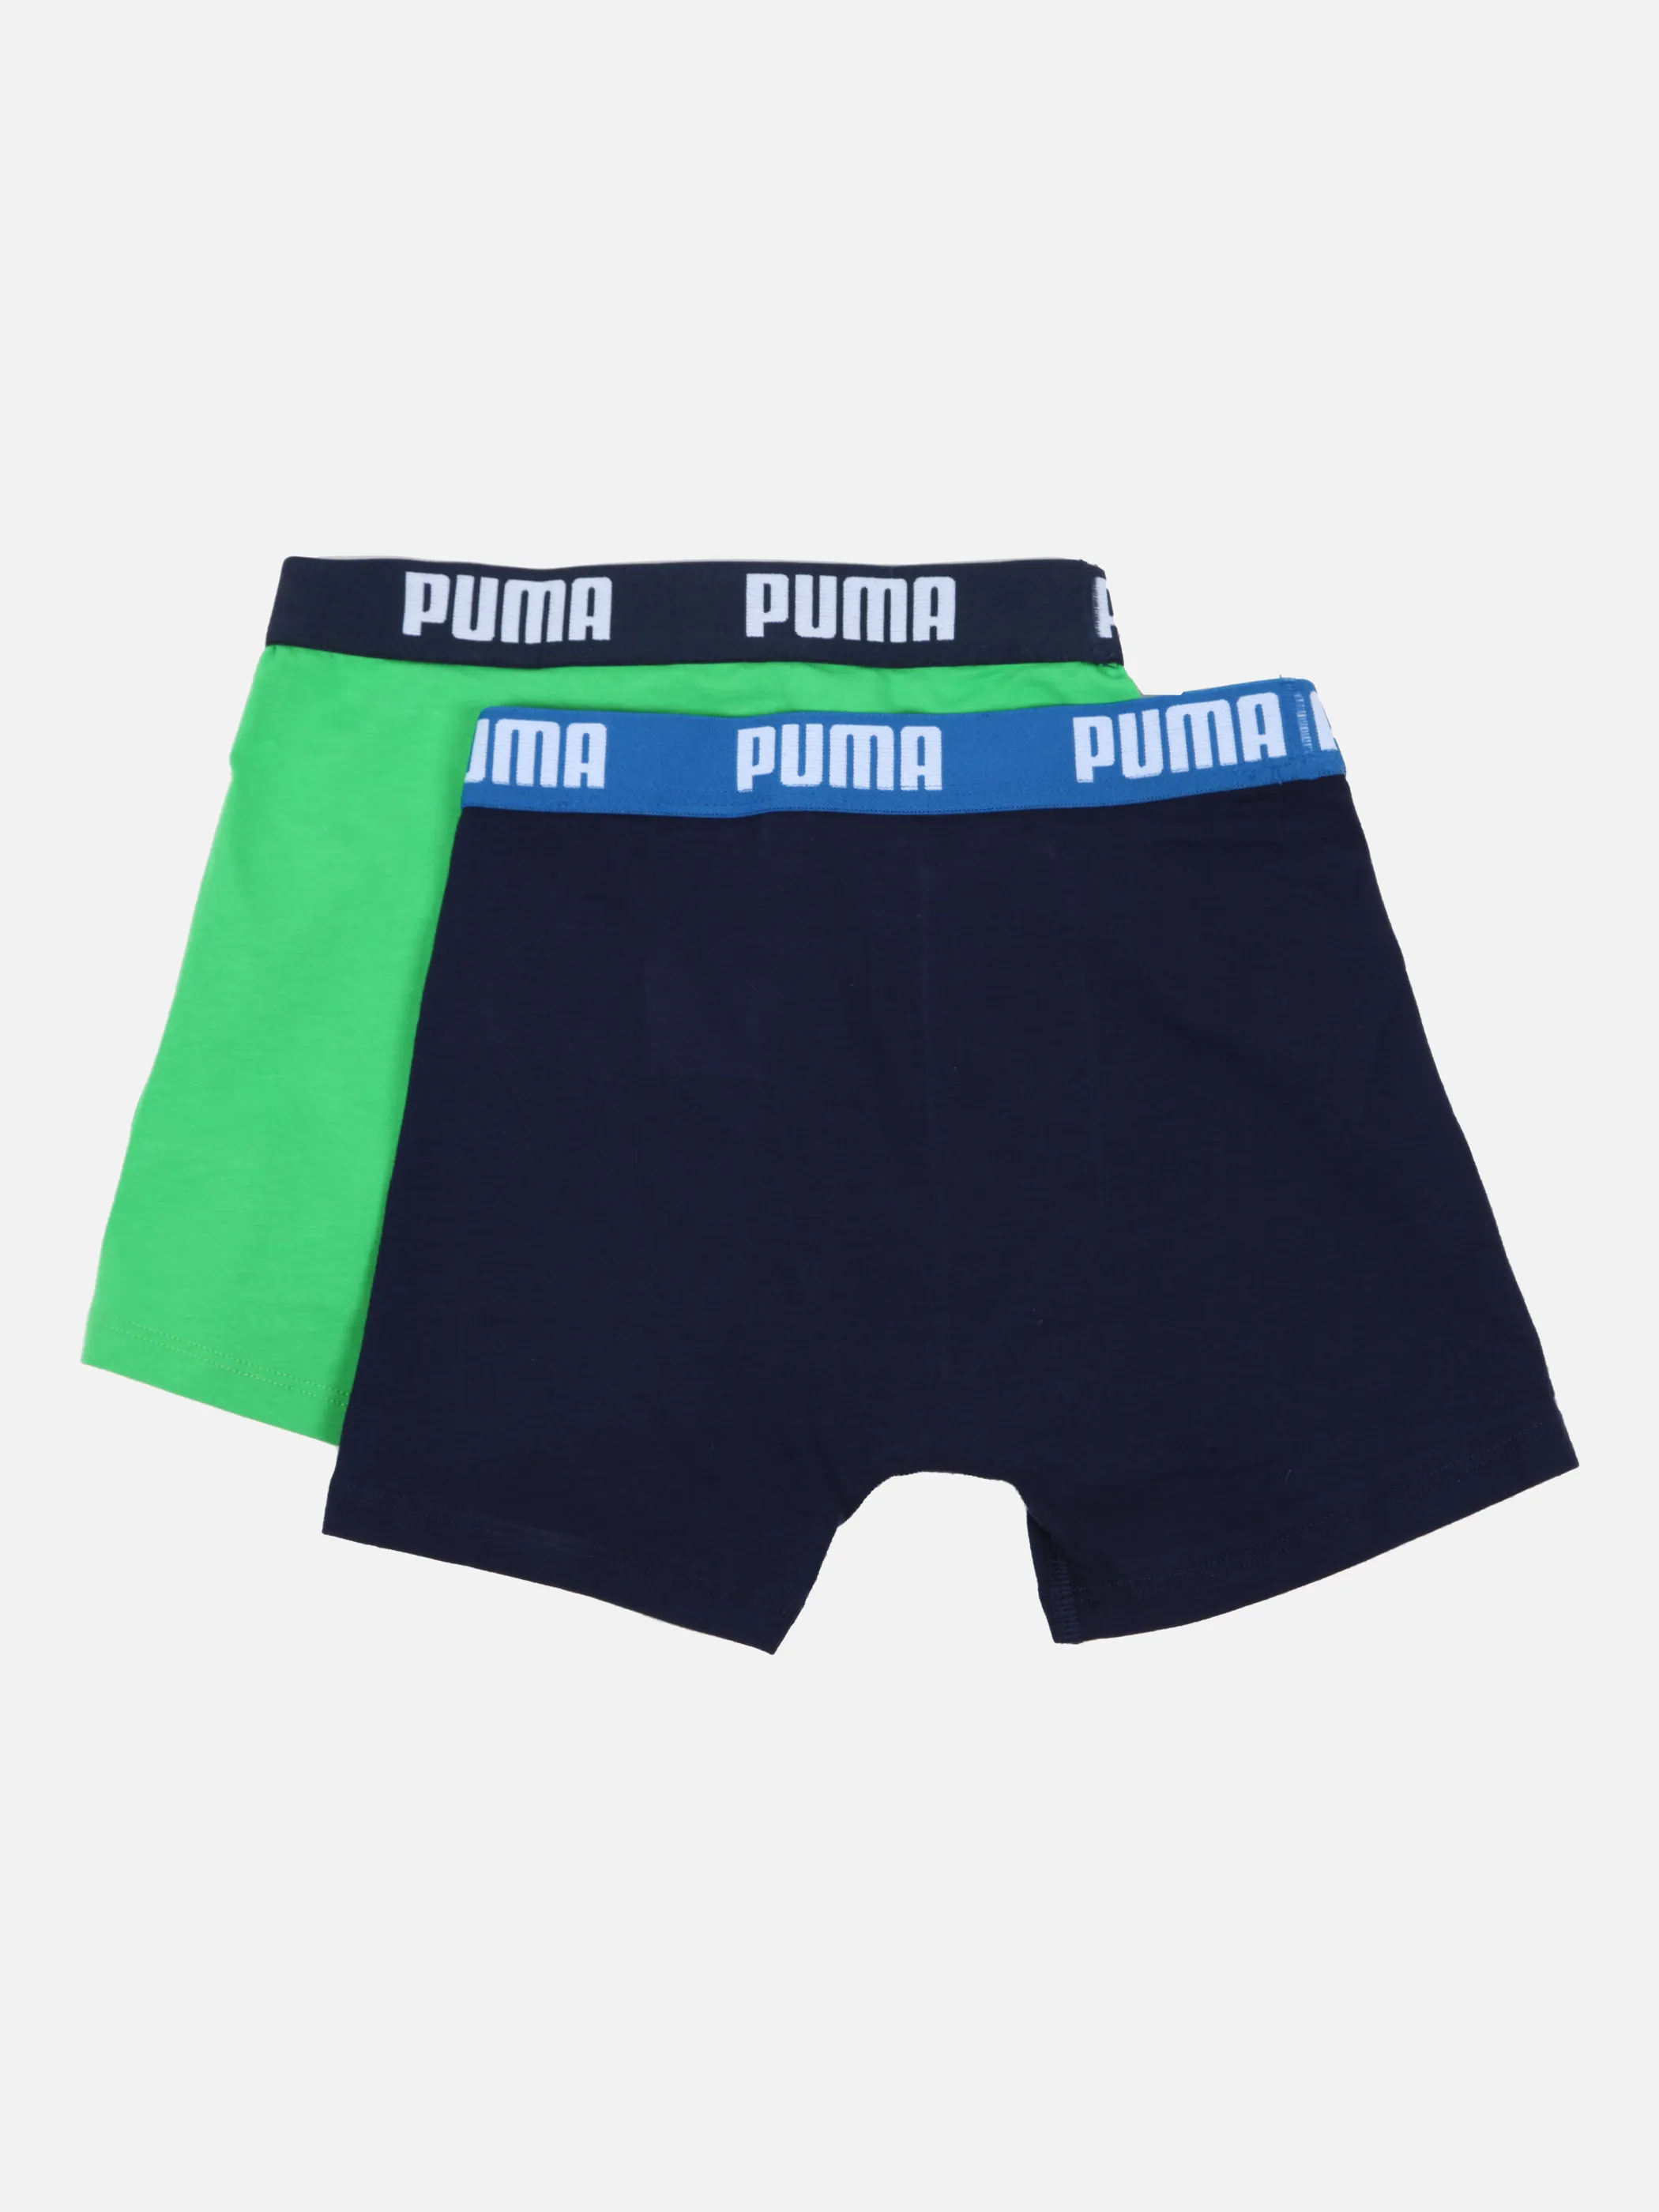 Puma Kn-PUMA BASIC BOXER 2er Pack Grün 834192 686 2